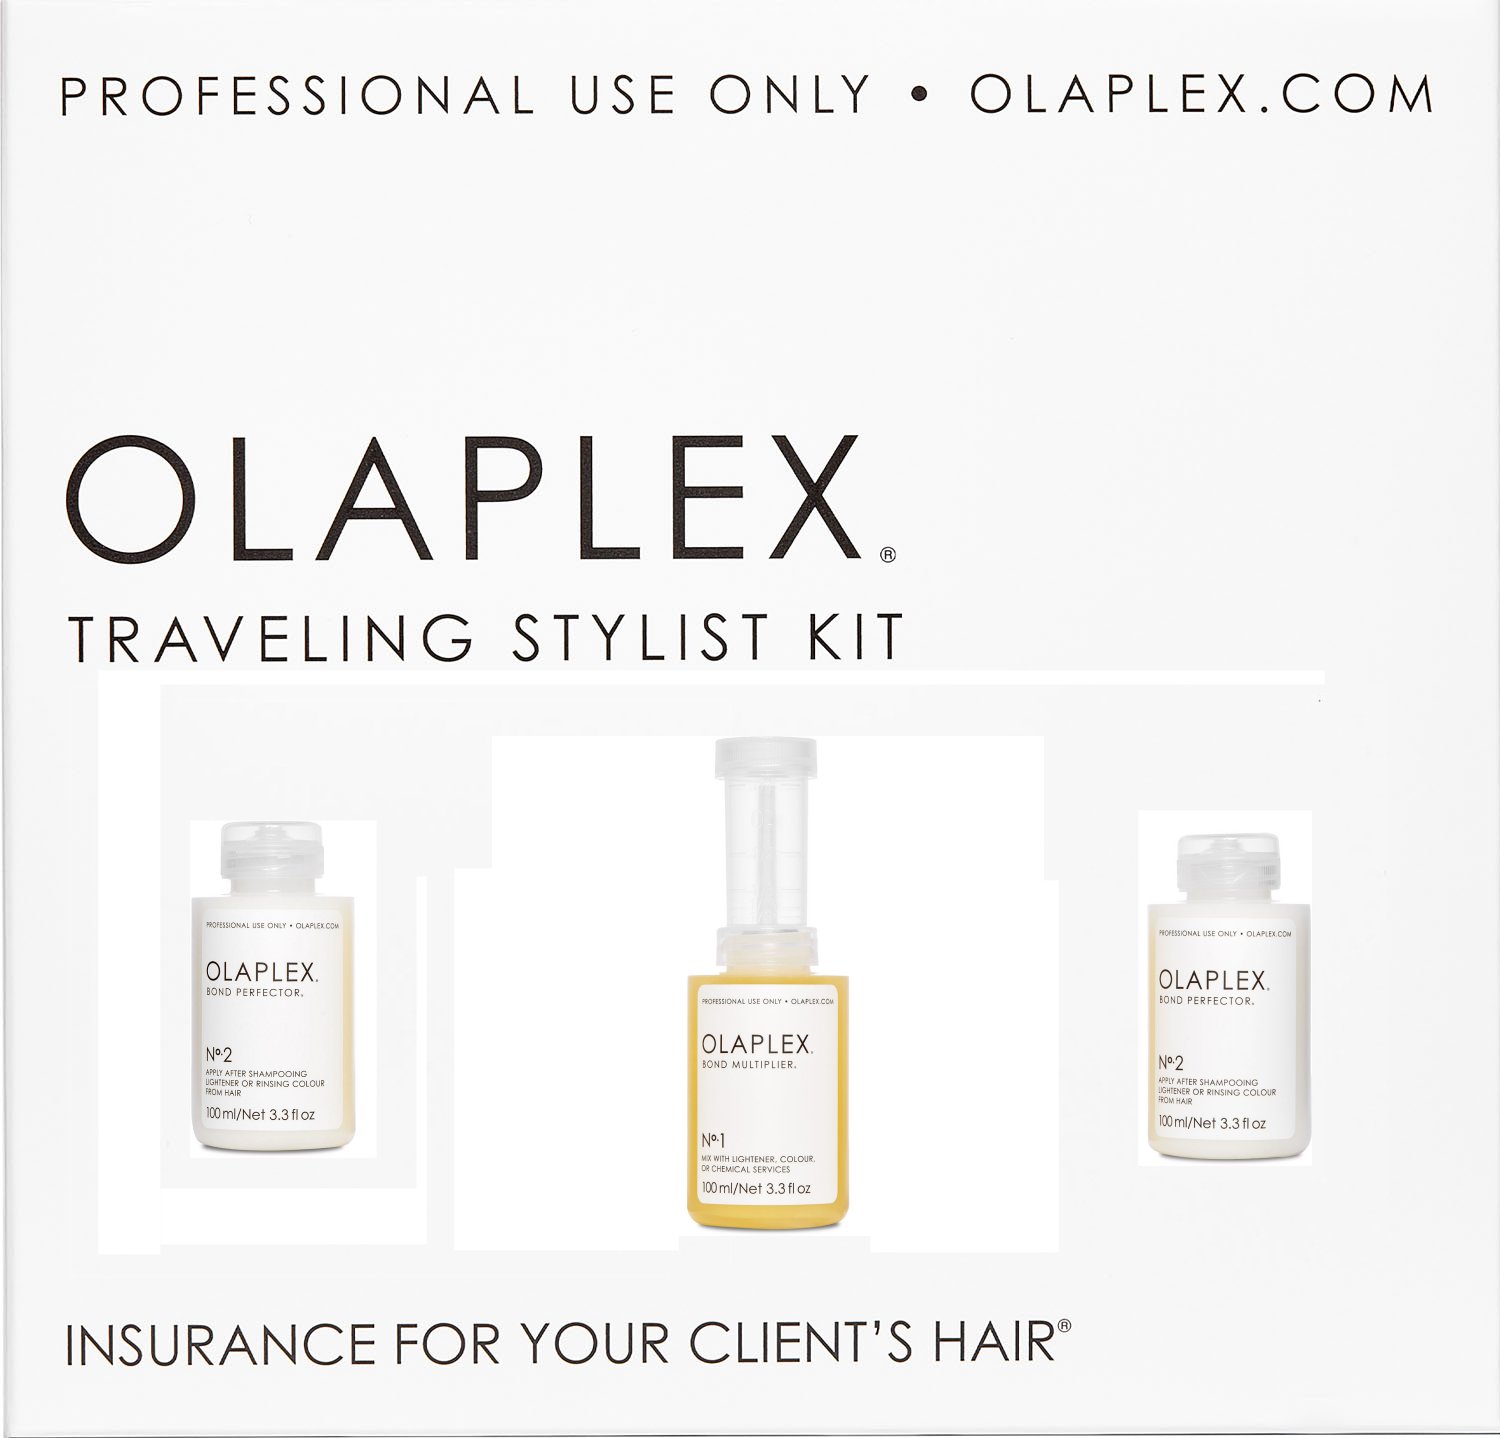 olaplex travelling kit.jpg